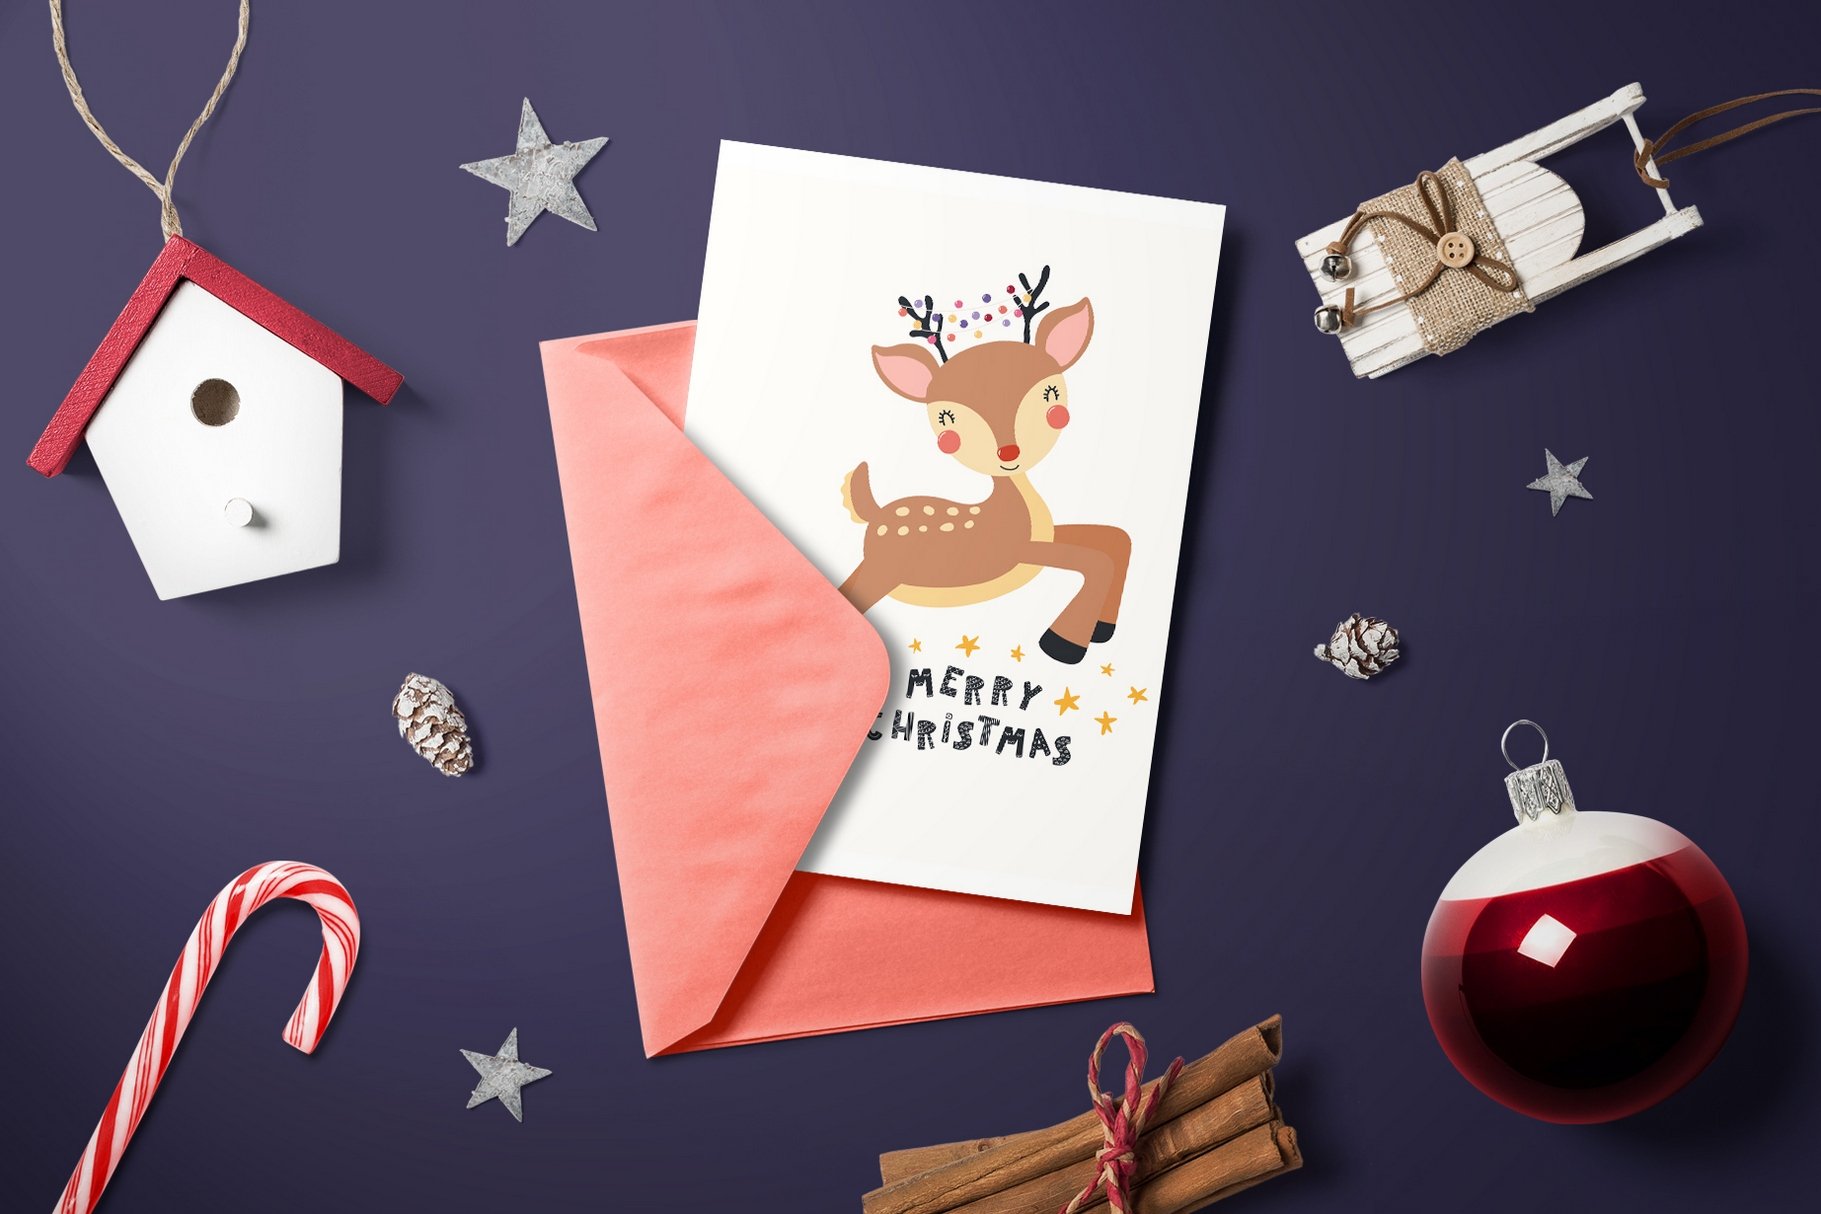 Cute Christmas card with a deer.